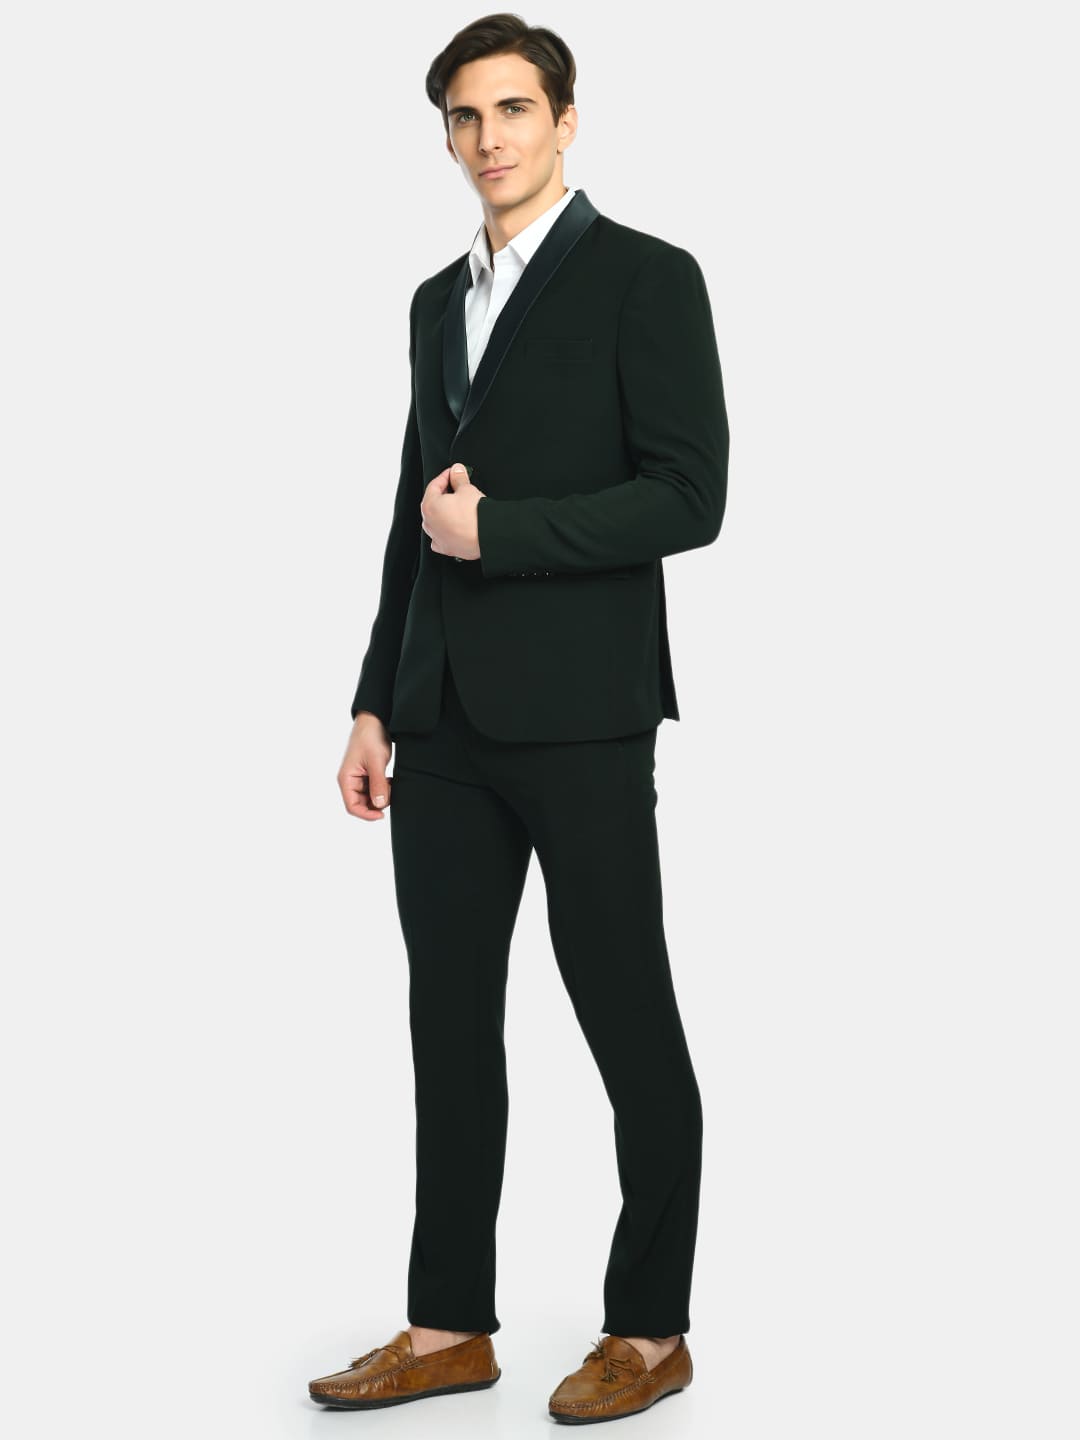 Teal Green Italian Tuxedo Slim Fit Suit